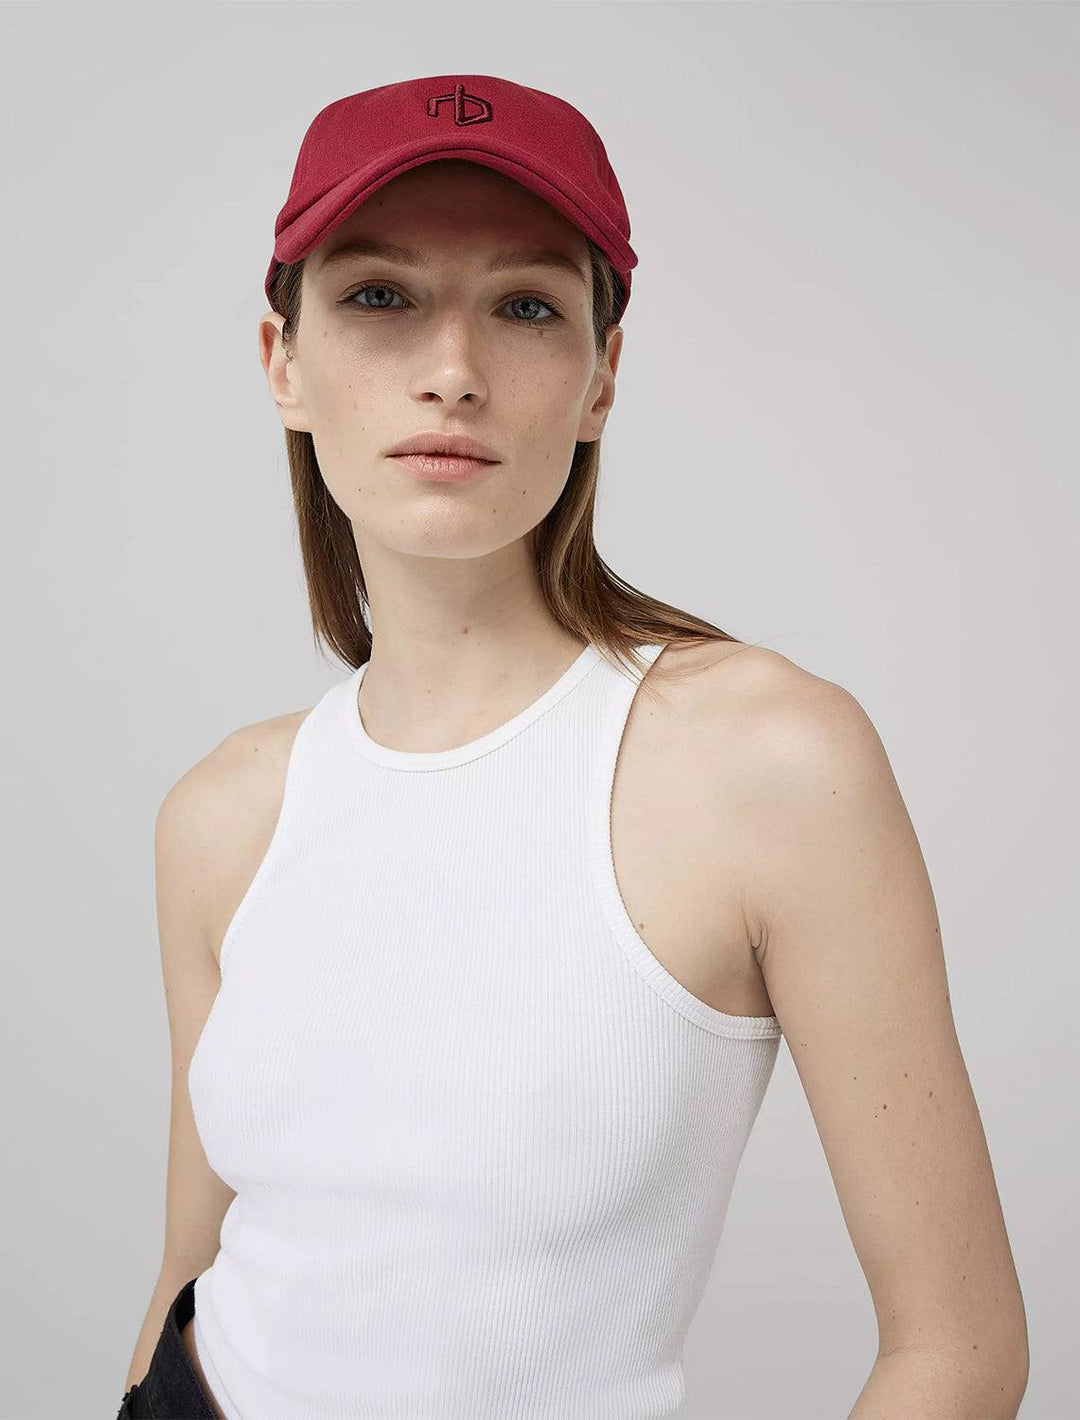 Model wearing Rag & Bone's aron baseball cap in biking red.